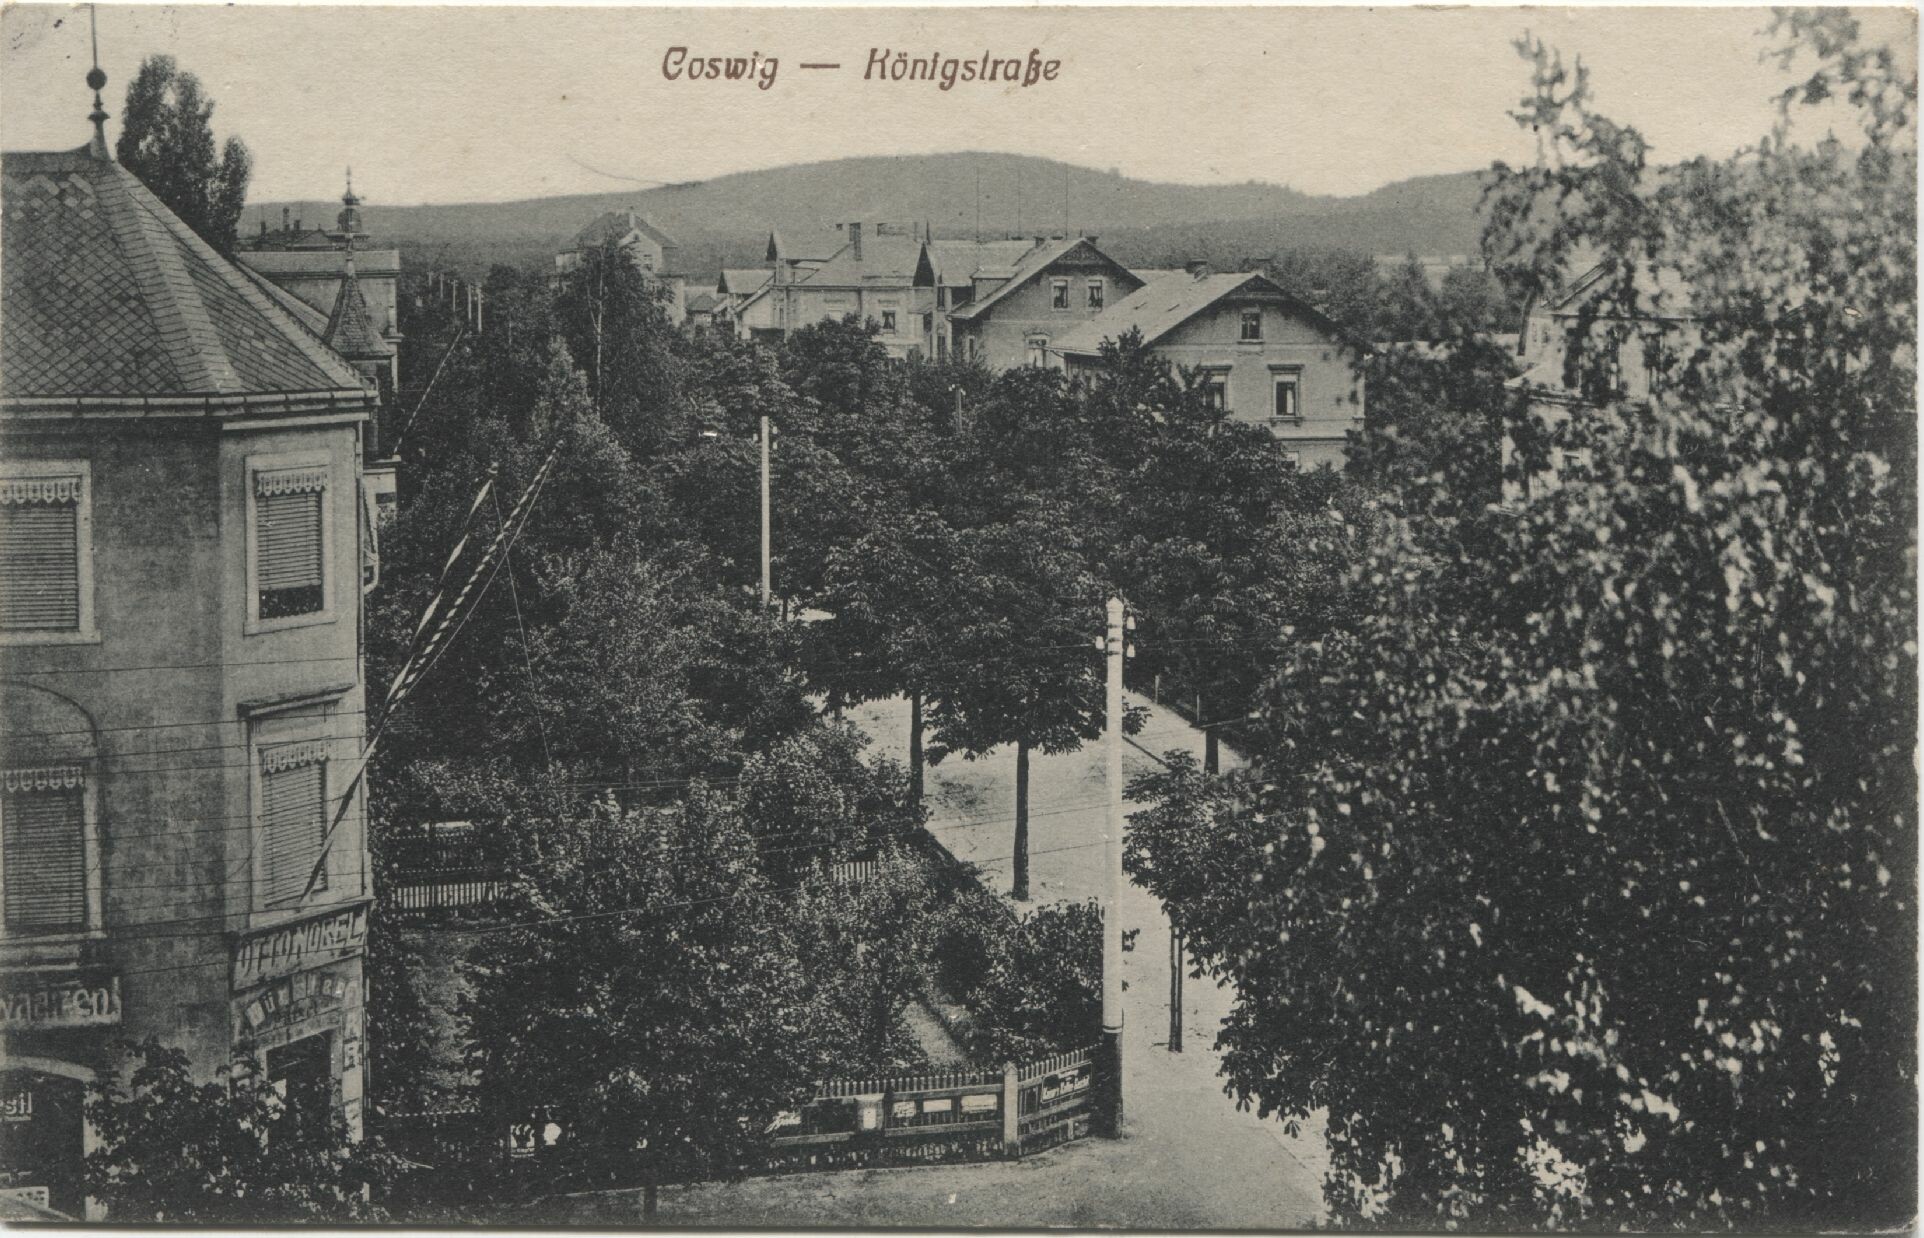 Postkarte: Coswig - Kastanienstraße (Königstraße) (Karrasburg Museum Coswig CC BY-NC-SA)